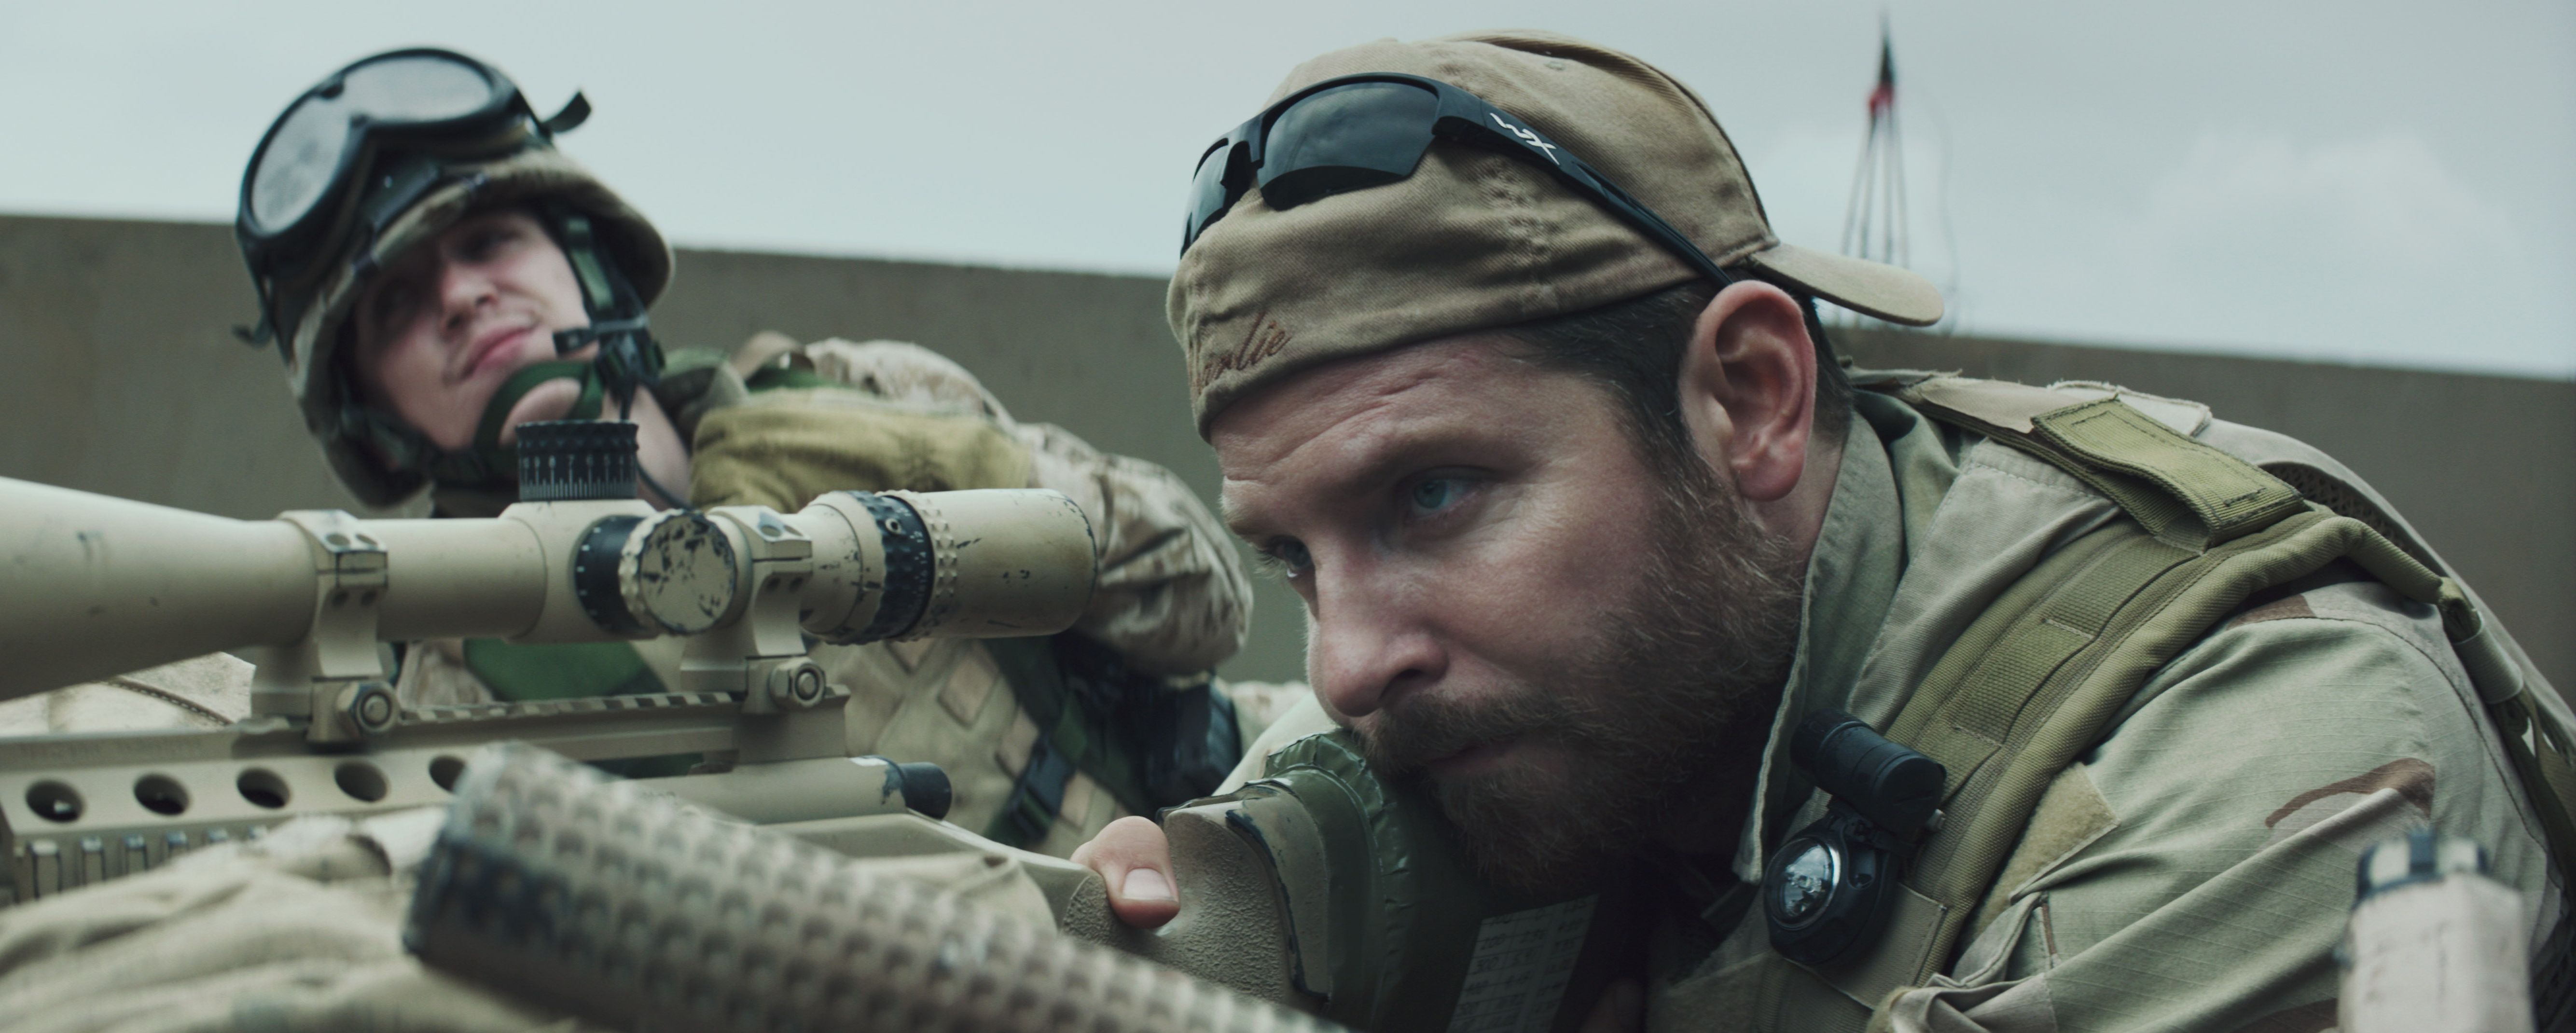 Bradley Cooper taking aim in American Sniper